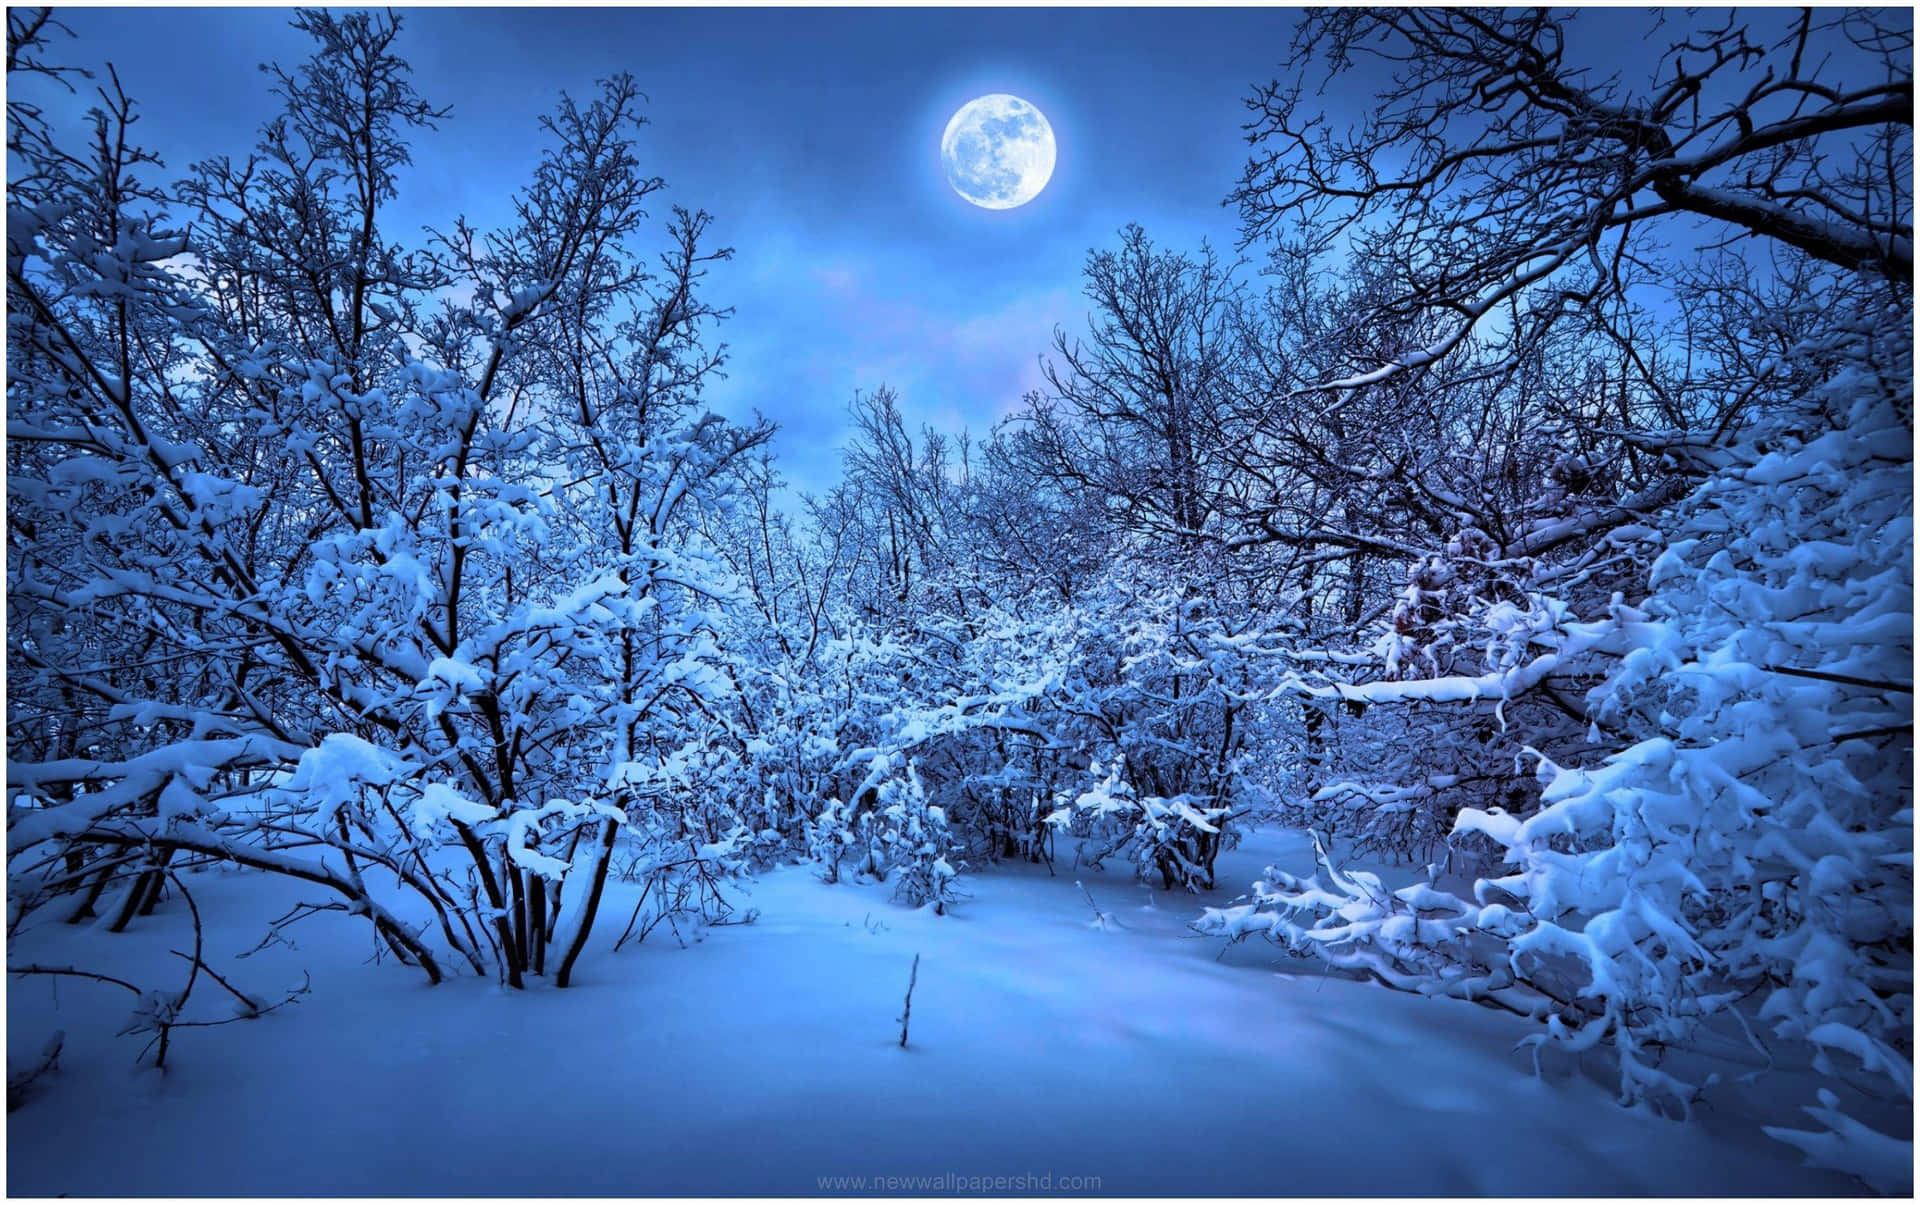 Winter Night Desktop With A Full Moon Wallpaper